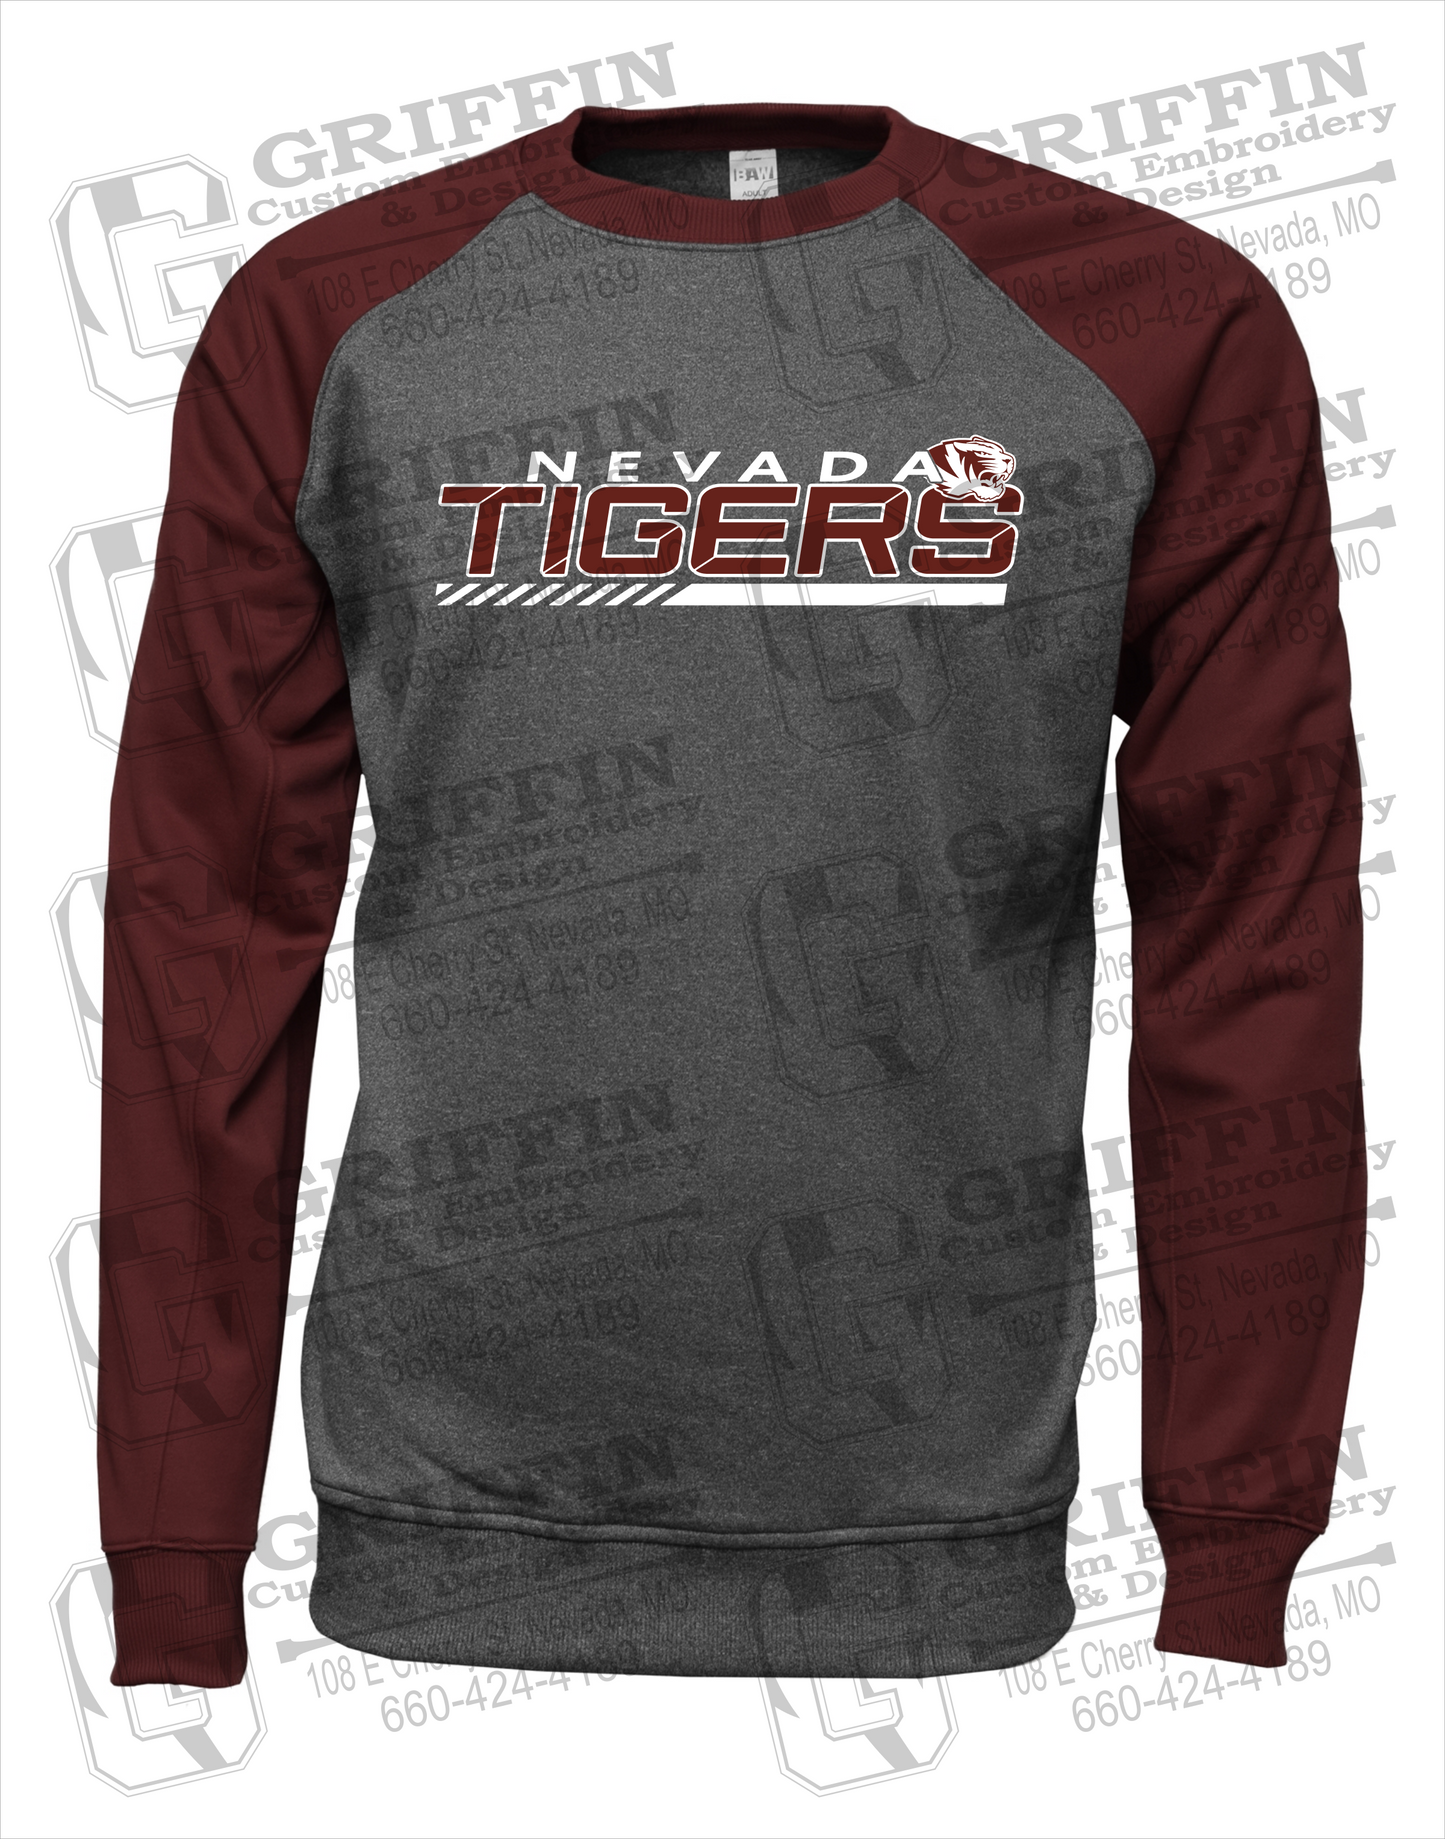 Nevada Tigers 22-E Youth Raglan Sweatshirt